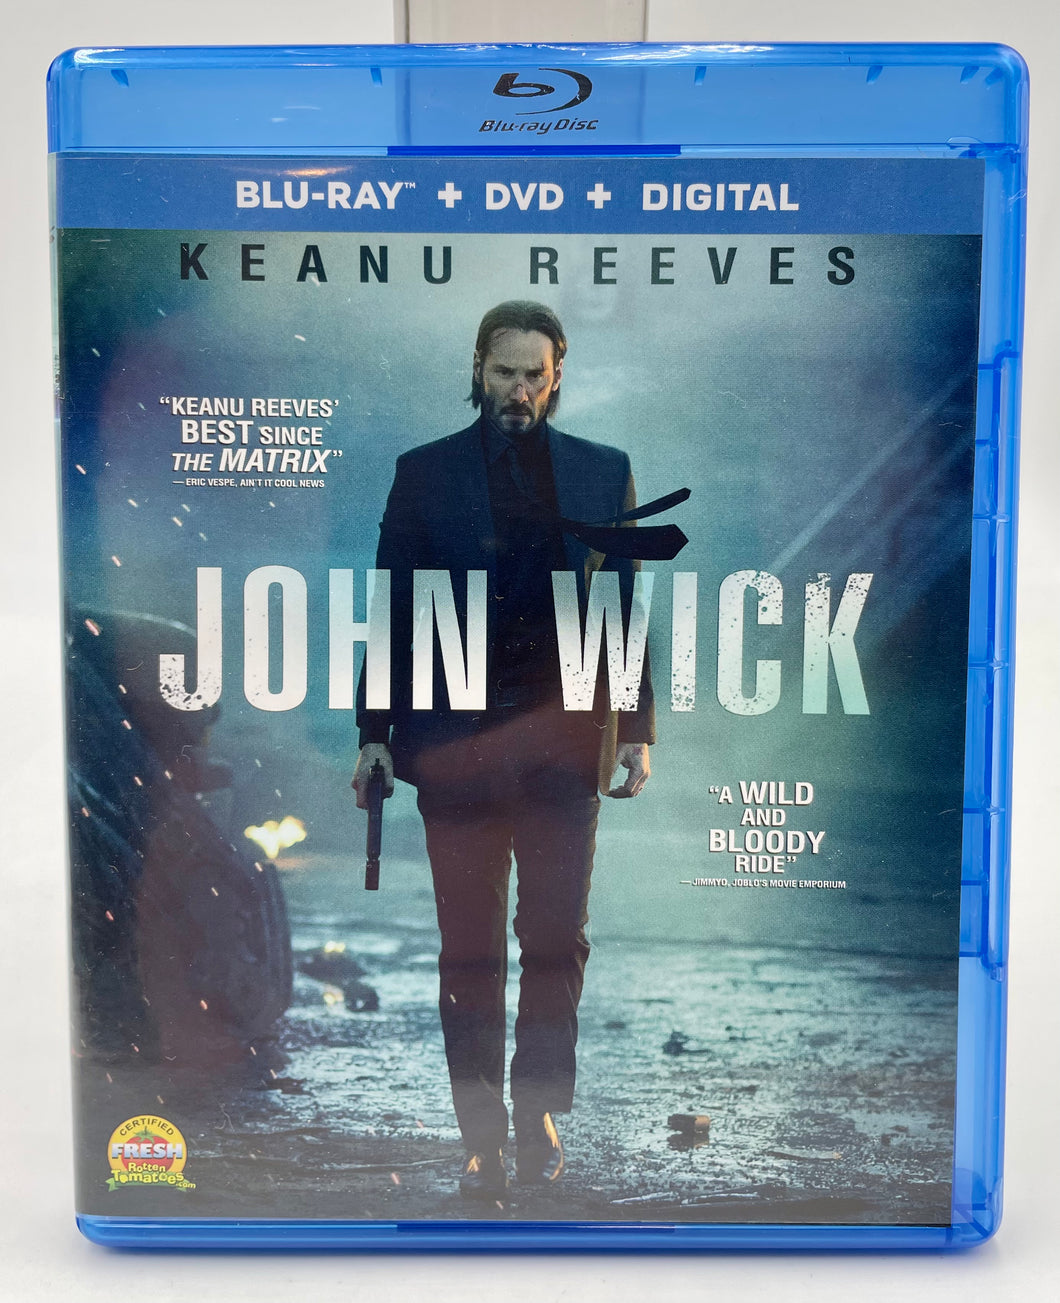 John Wick Blu-ray, DVD, no Digital